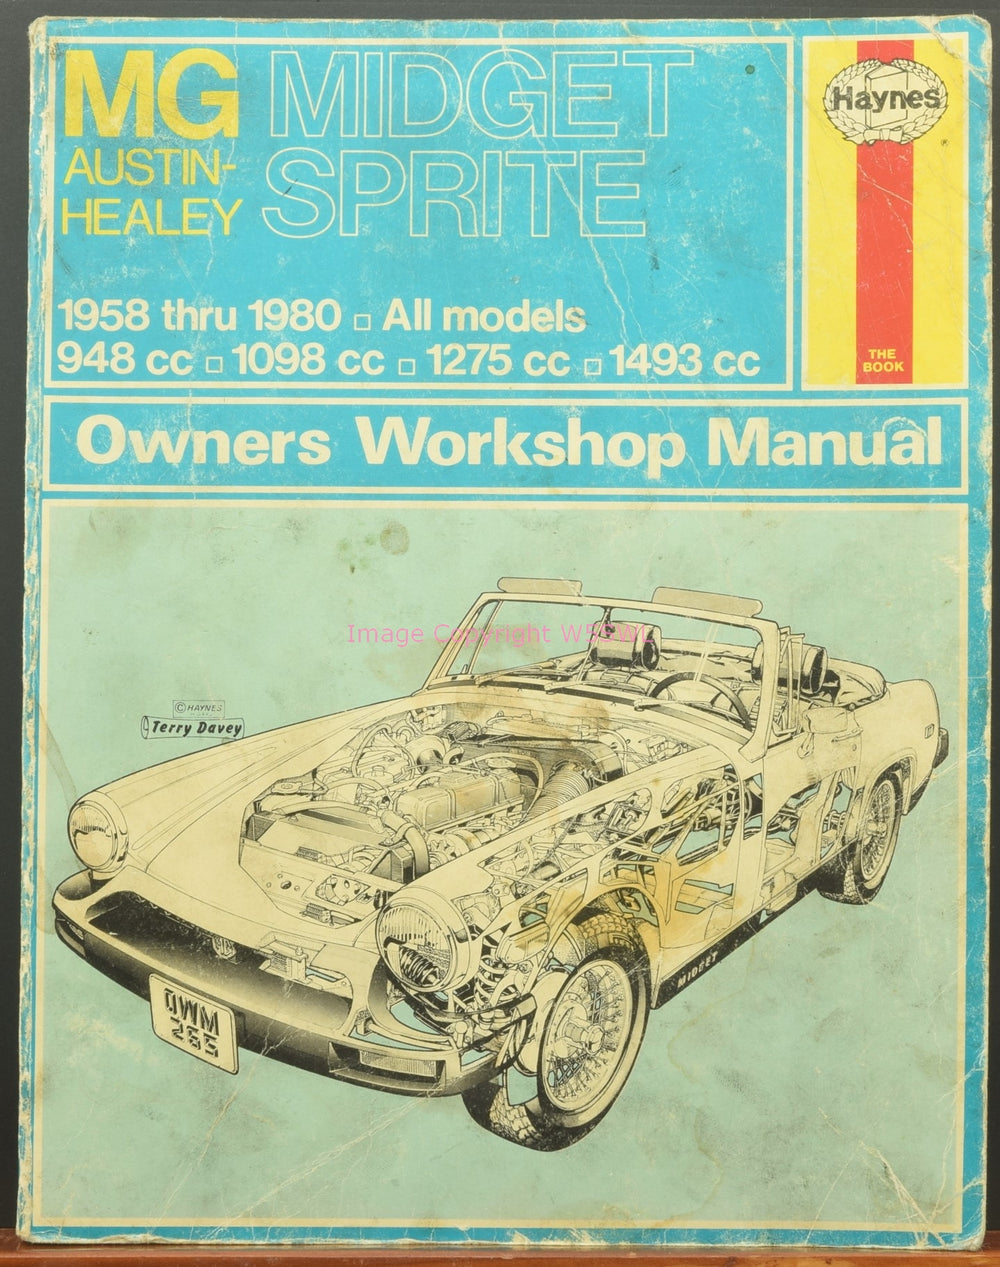 MG Midget Sprite Austin Healey Owners Workshop Manual 1958 thru 1980 - Dave's Hobby Shop by W5SWL